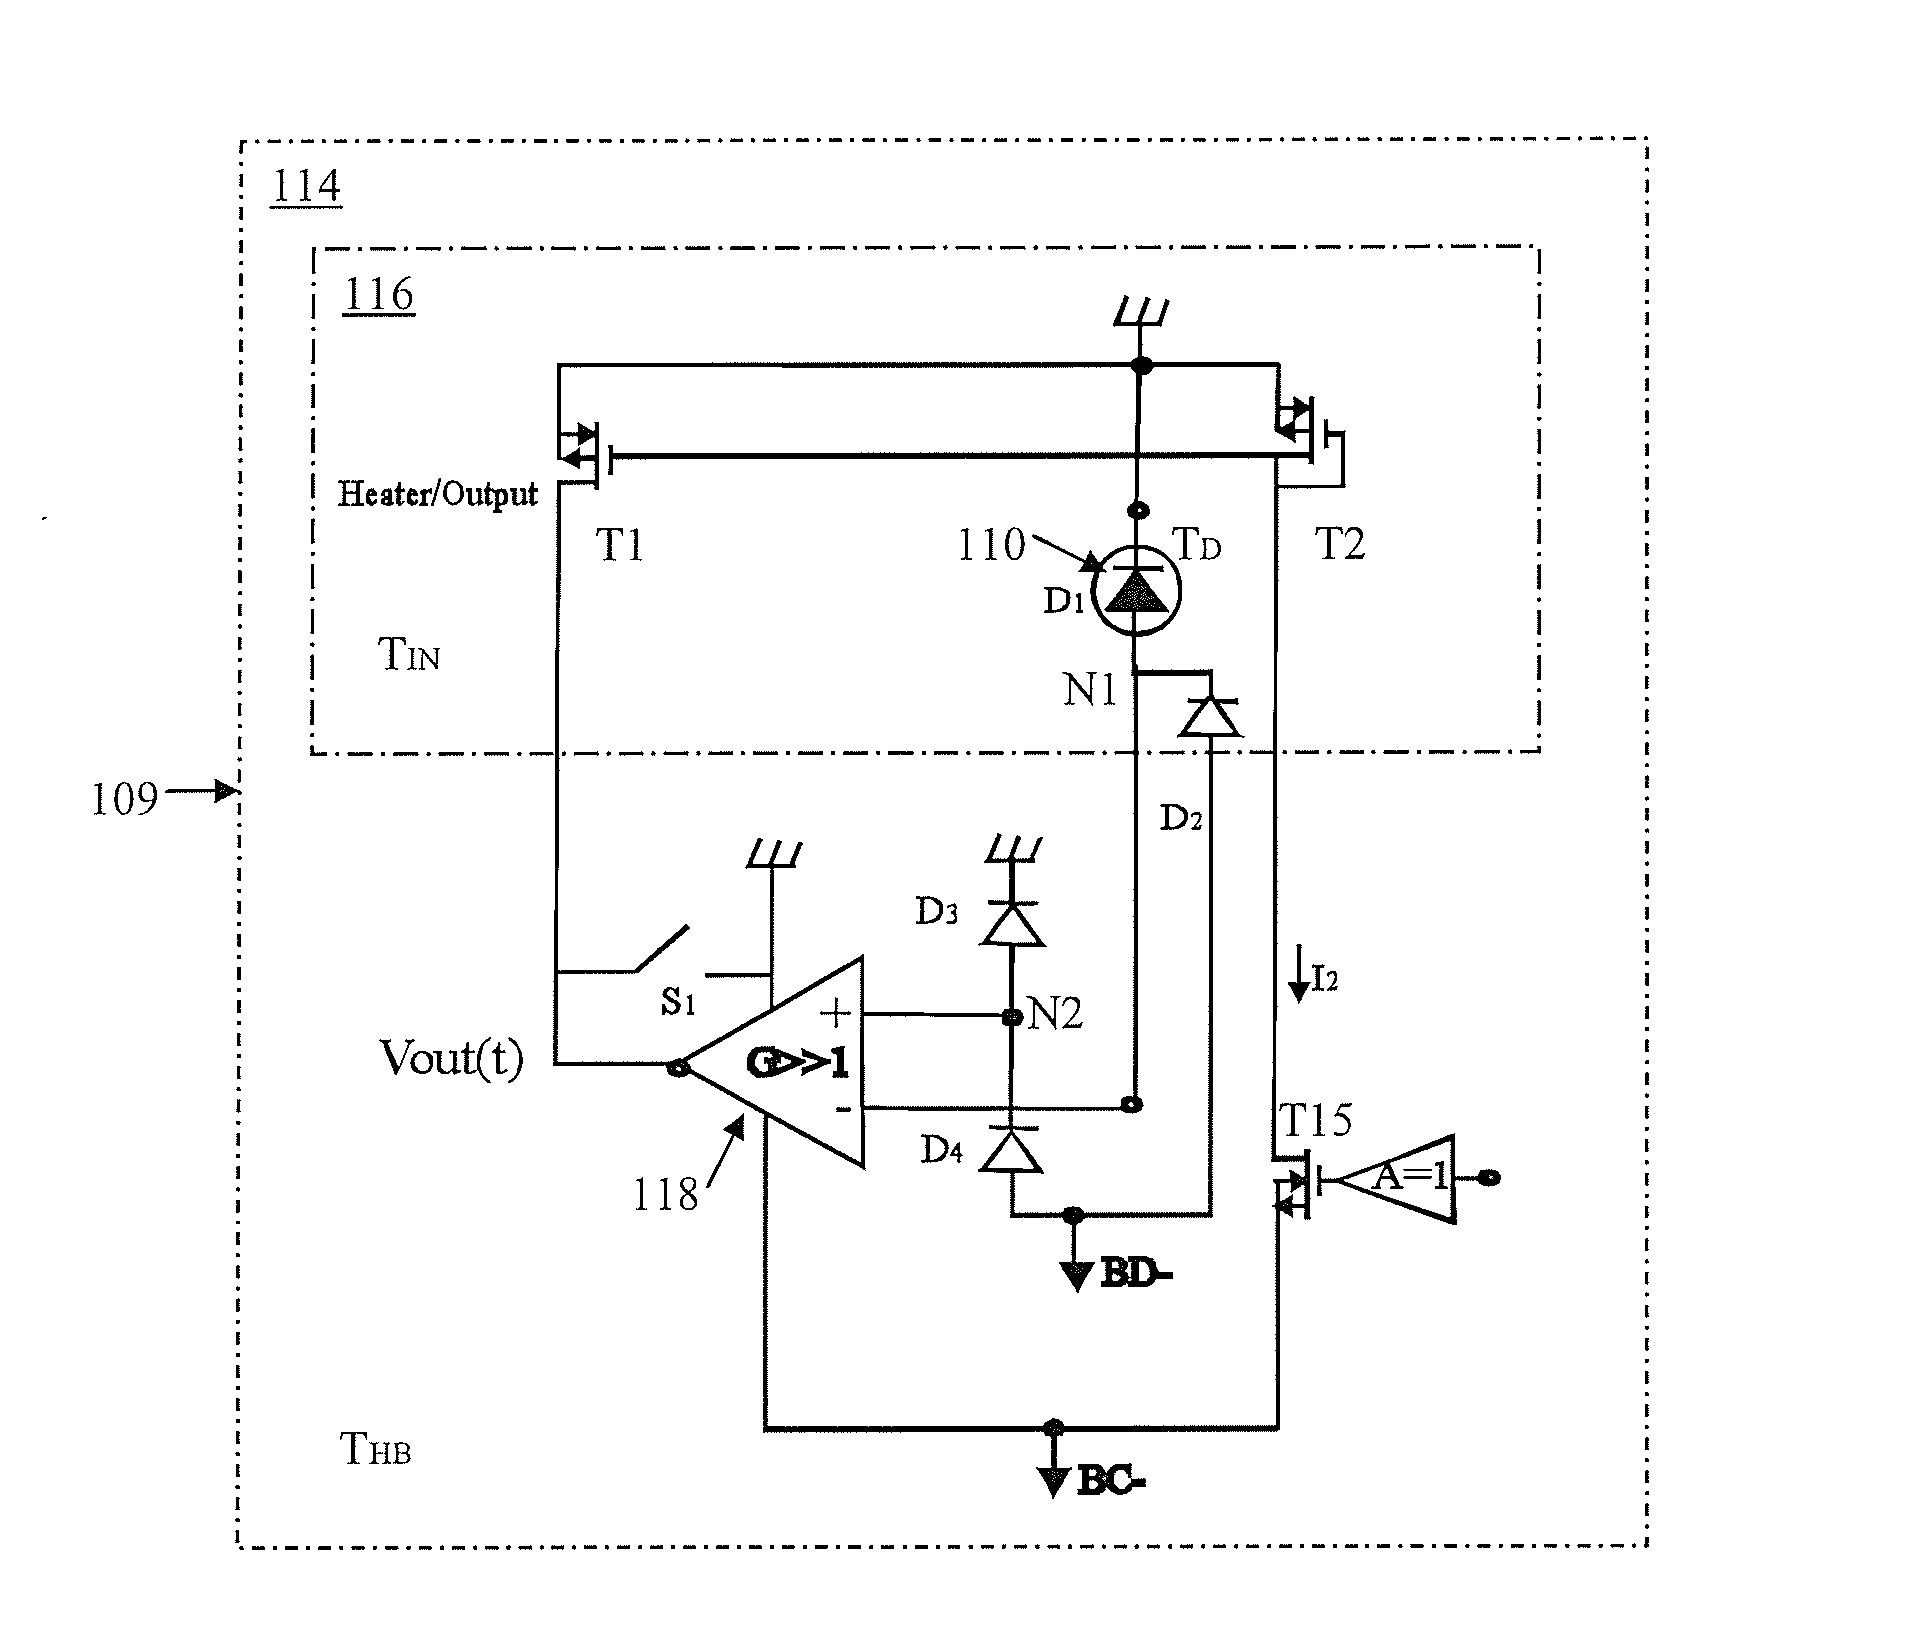 Series diode electro-thermal circuit for ultra sensitive silicon sensor